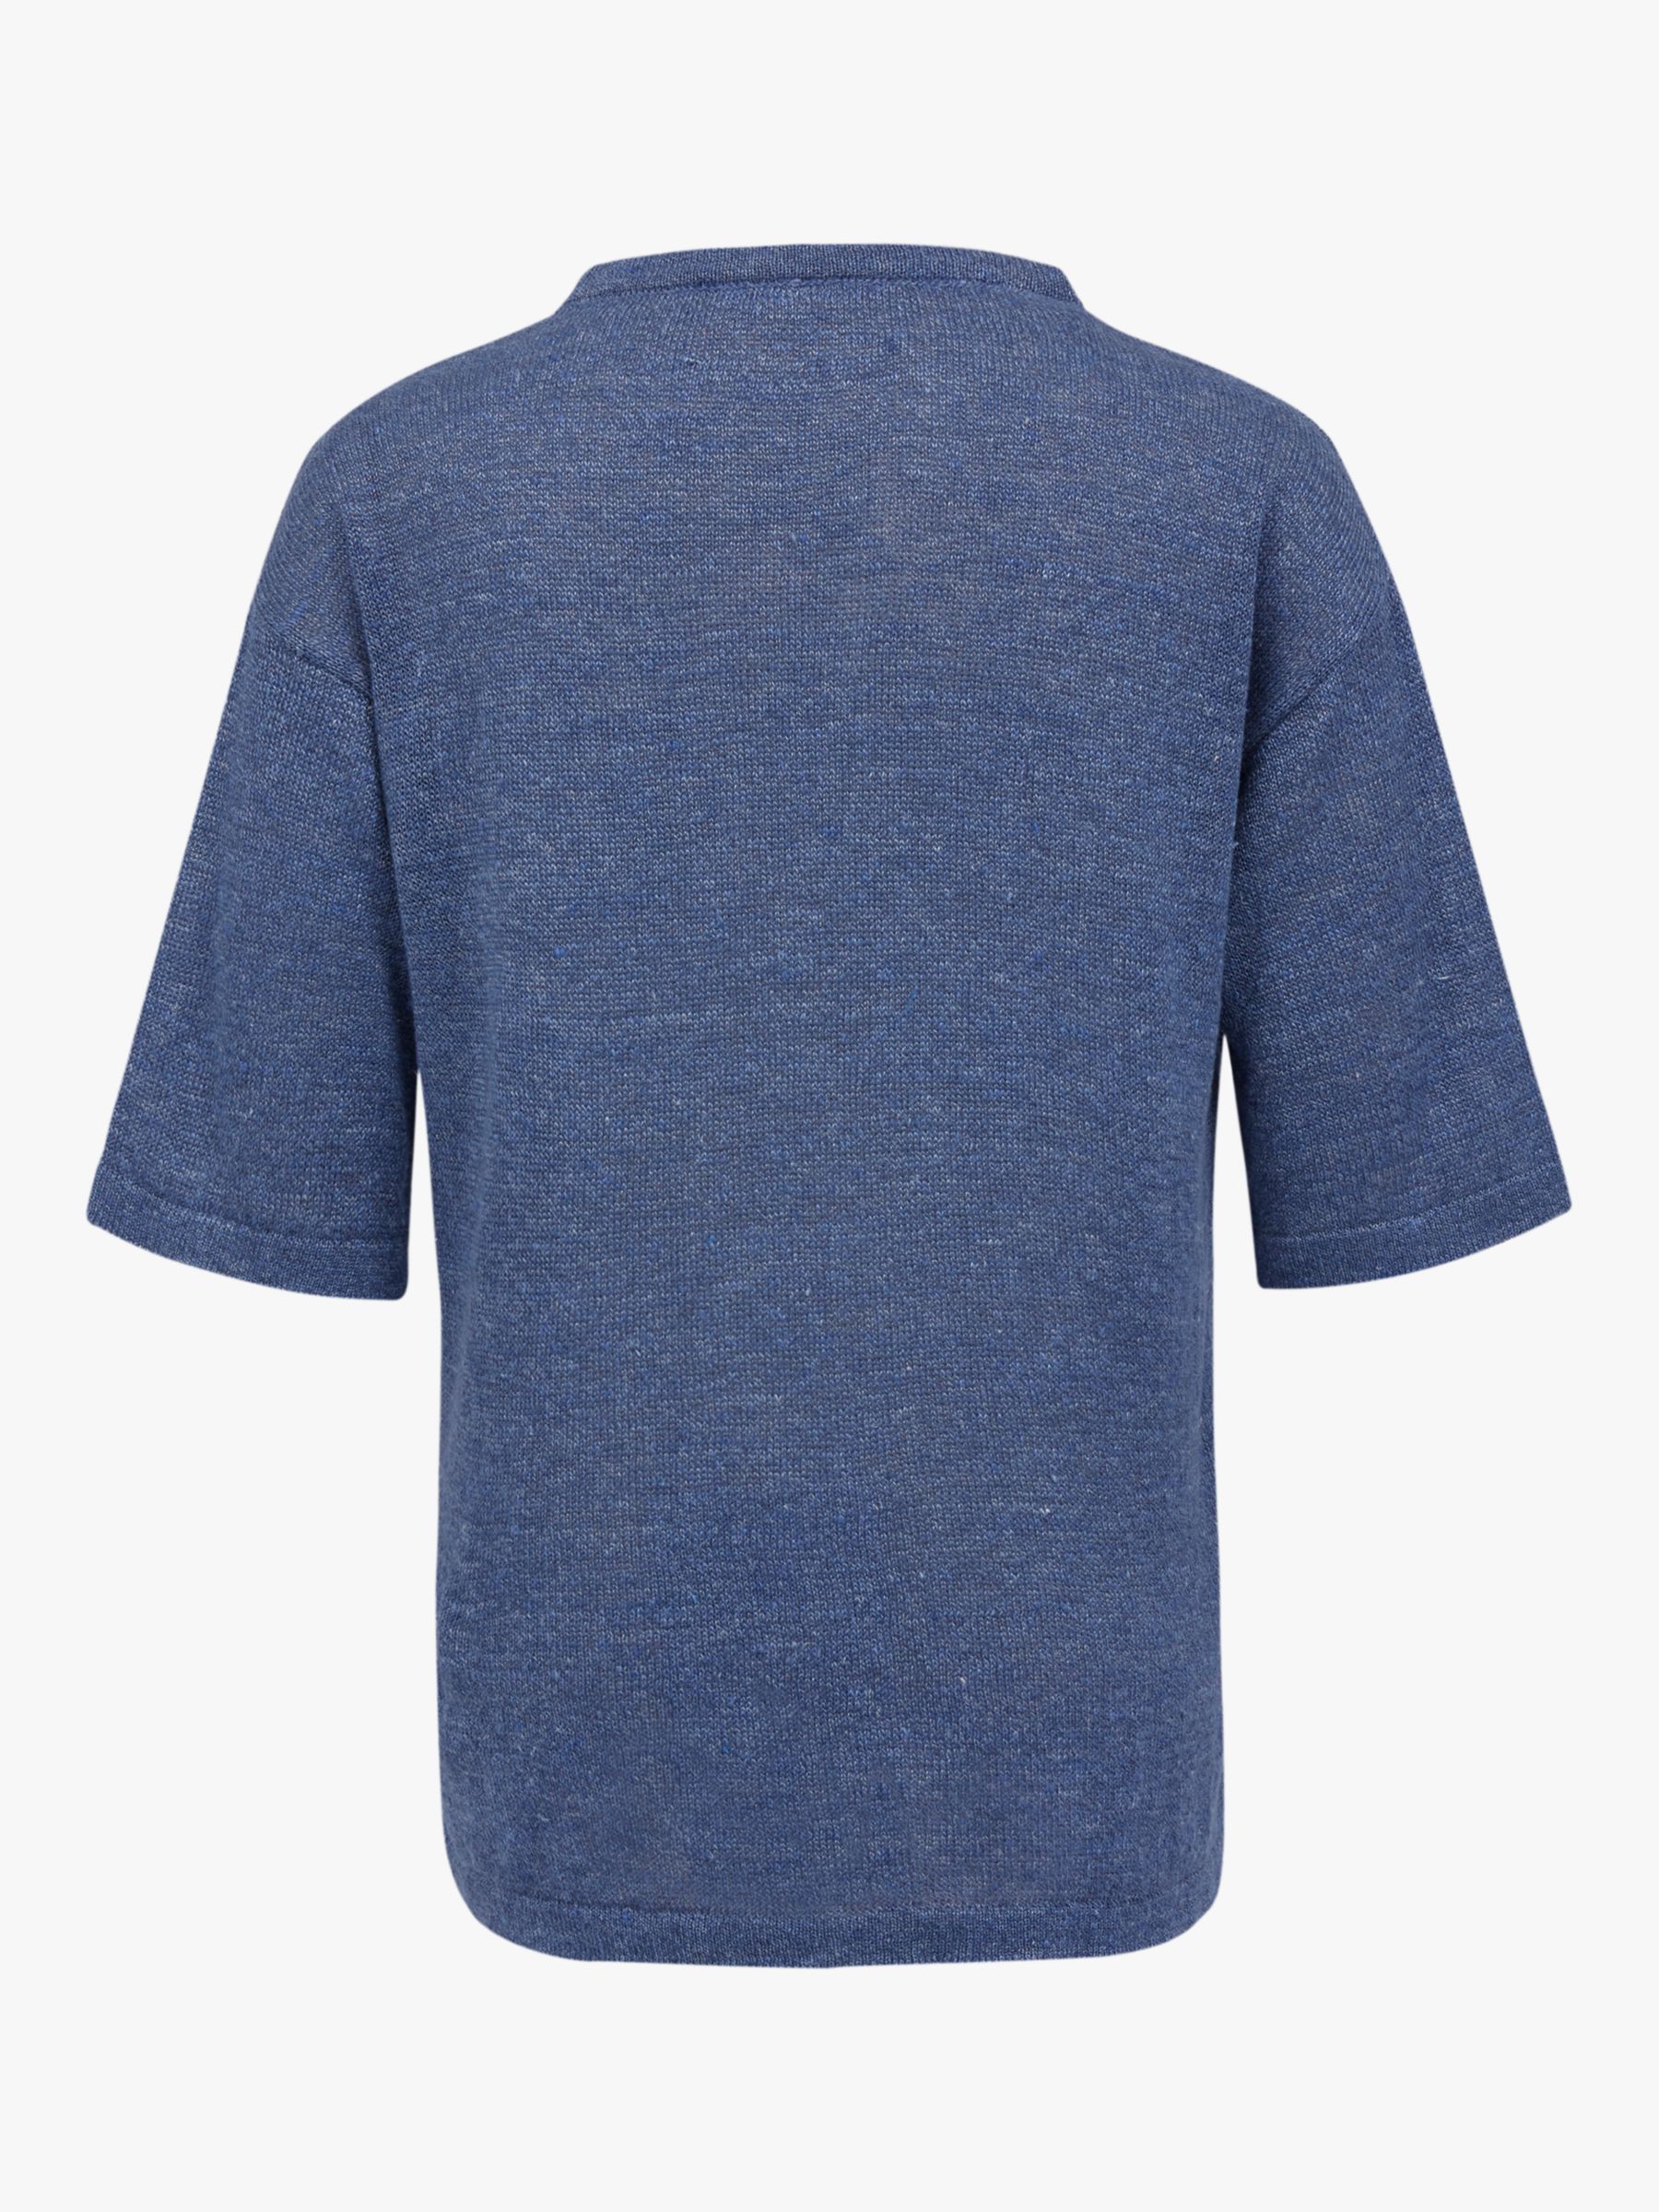 Buy Celtic & Co. Cotton Fine Knit T-Shirt, Indigo Online at johnlewis.com